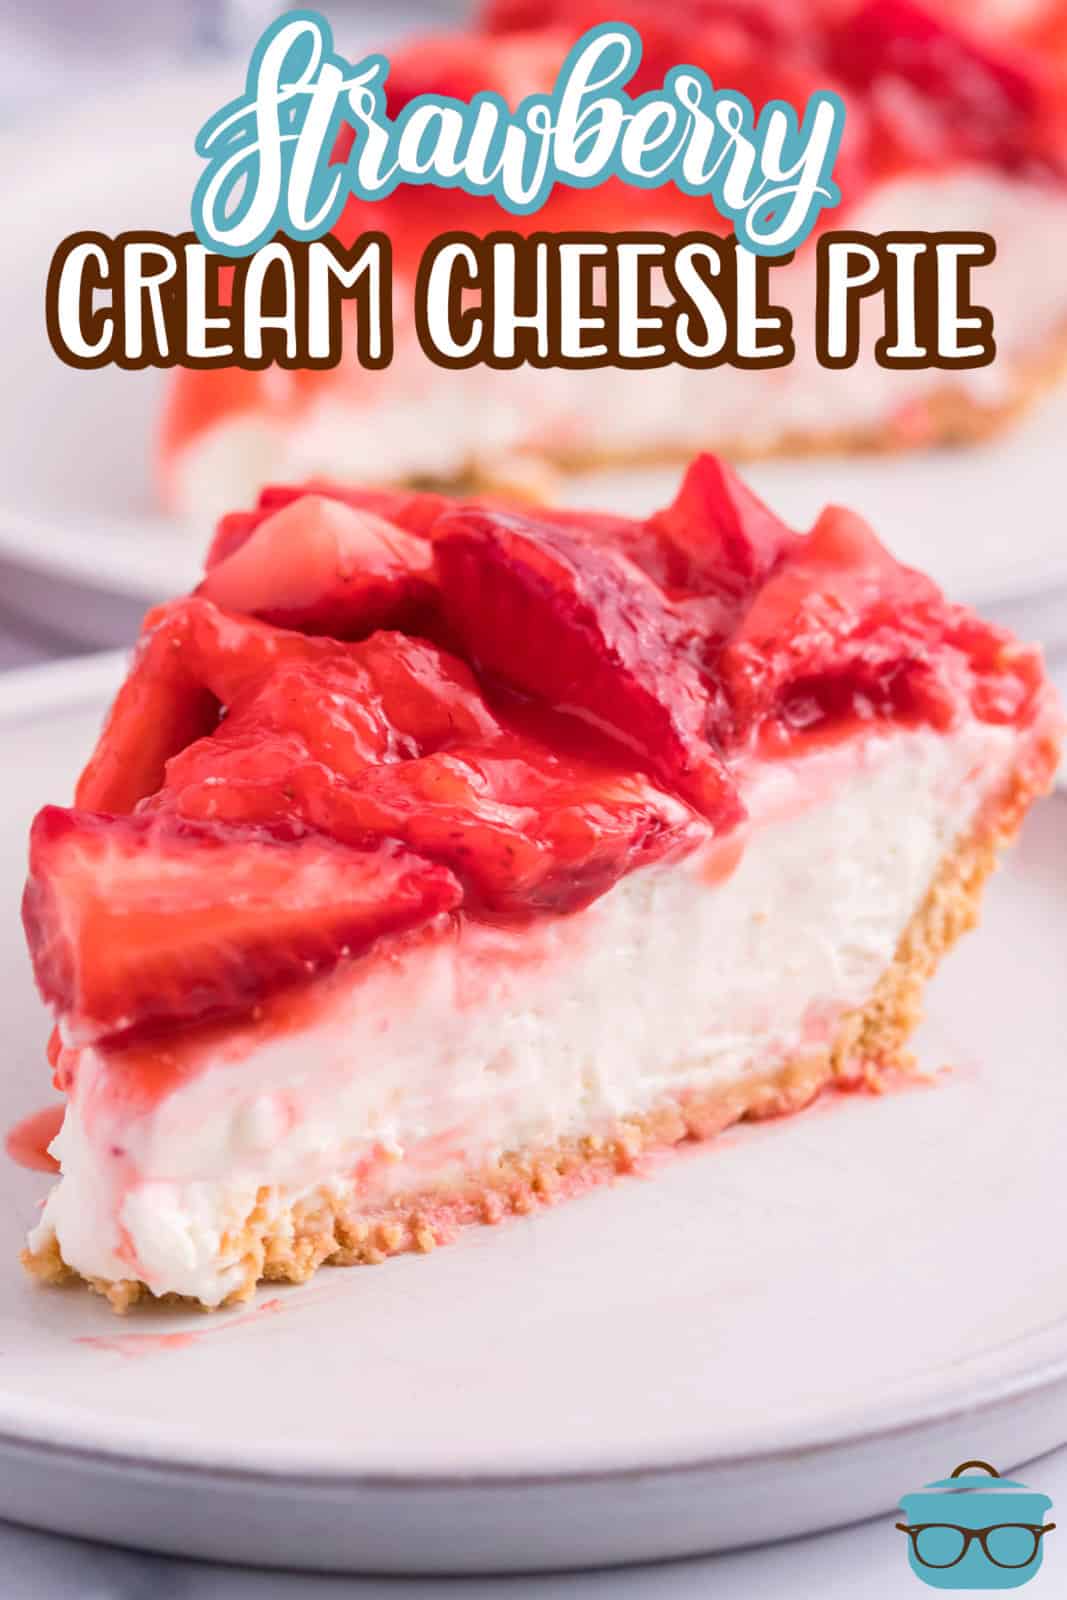 A slice of Strawberry Cream Cheese pie.